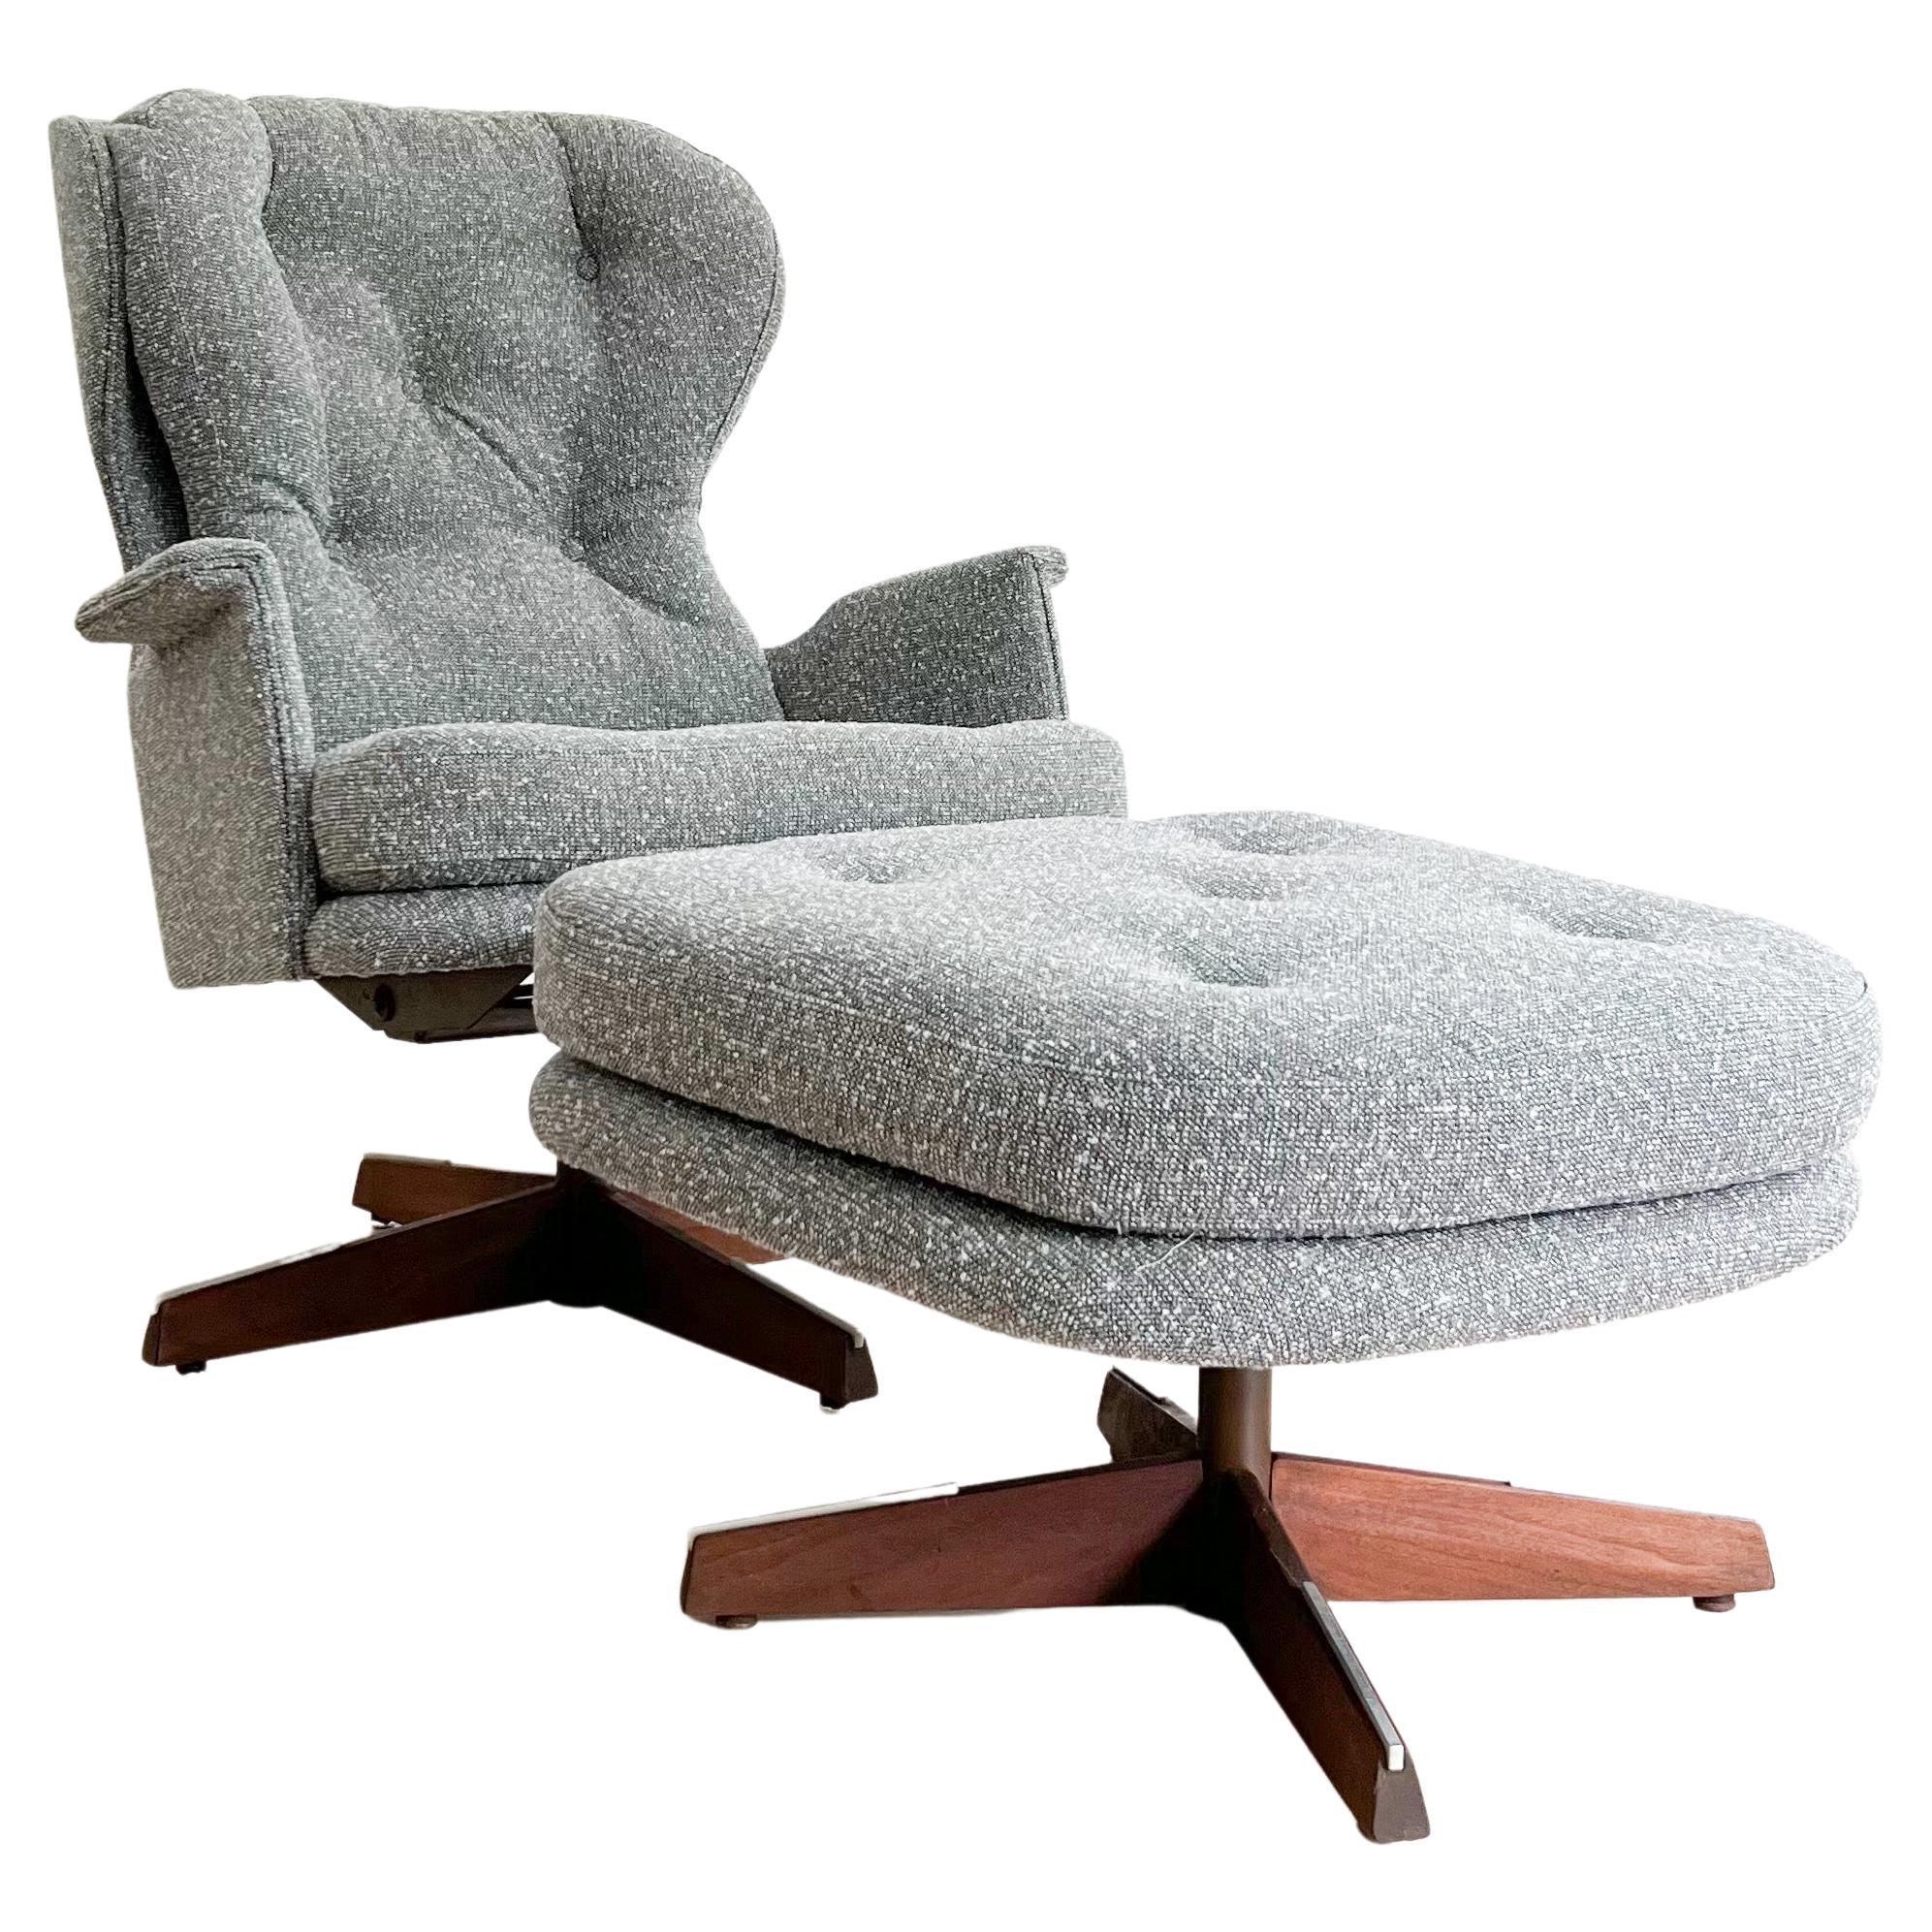 Mid Century Swivel Rocker Lounge Chair and Ottoman - New Grey Tweed Upholstery